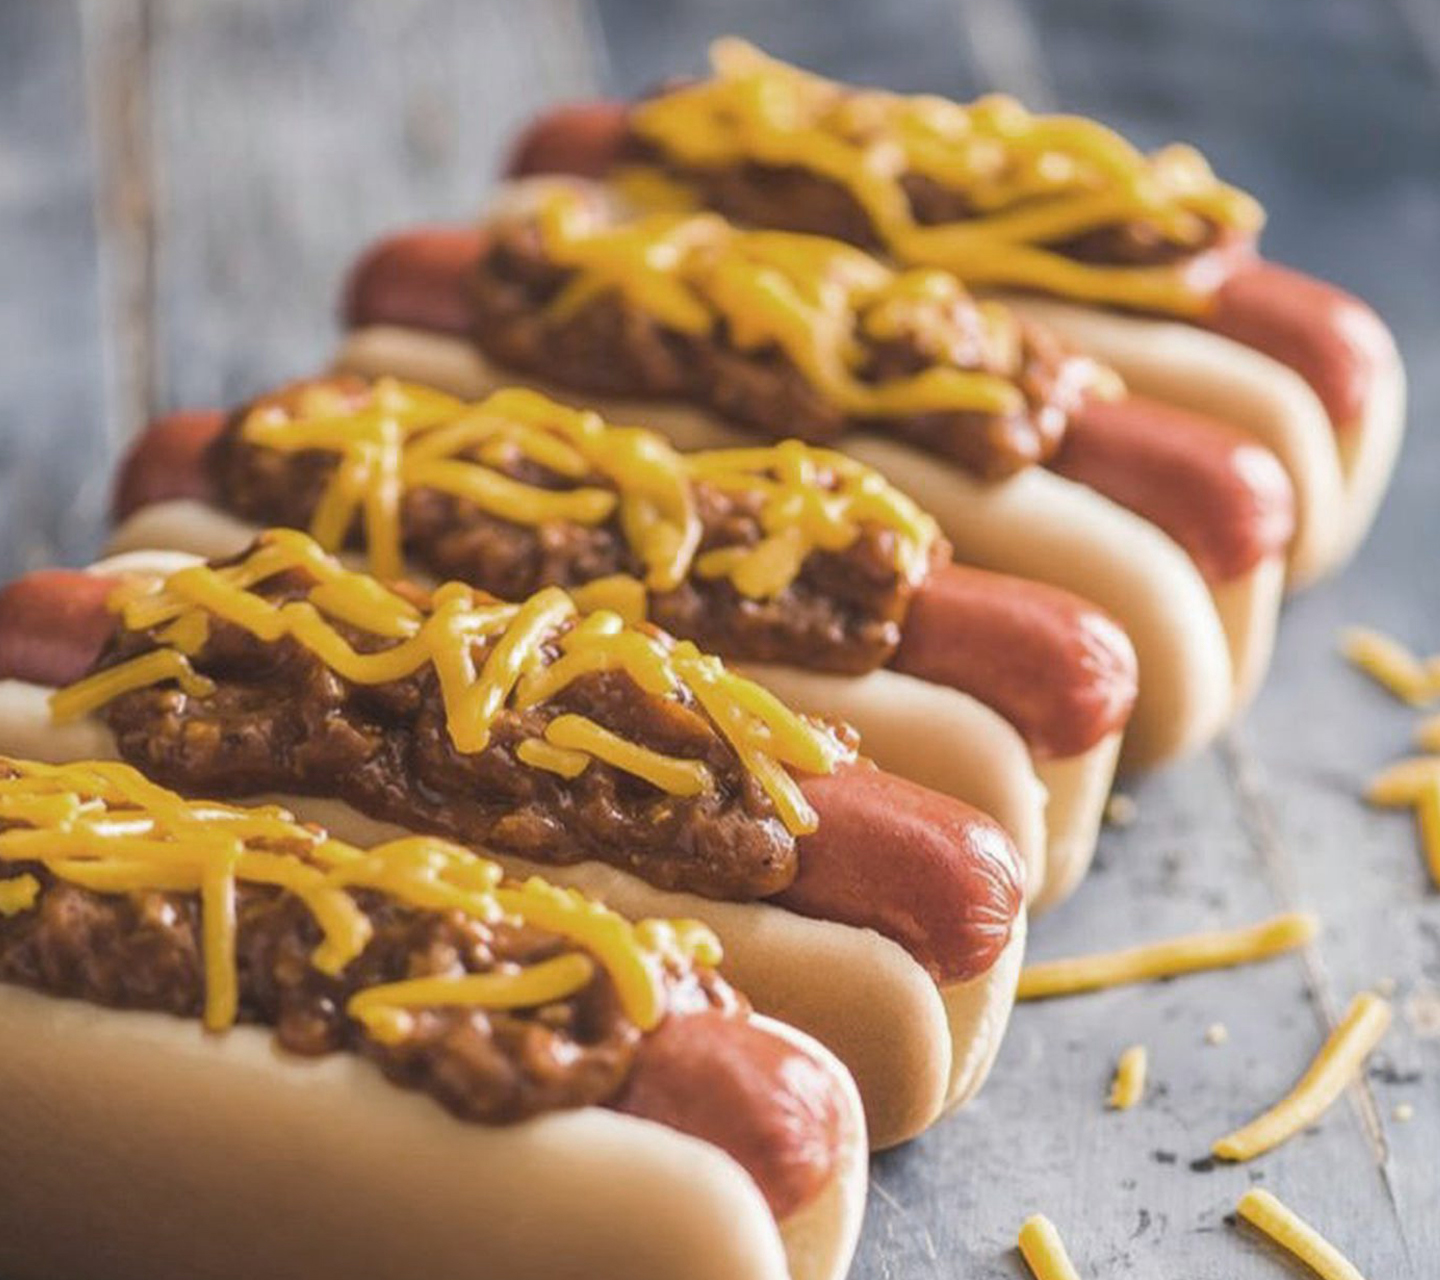 Wienerschnitzel hot dogs